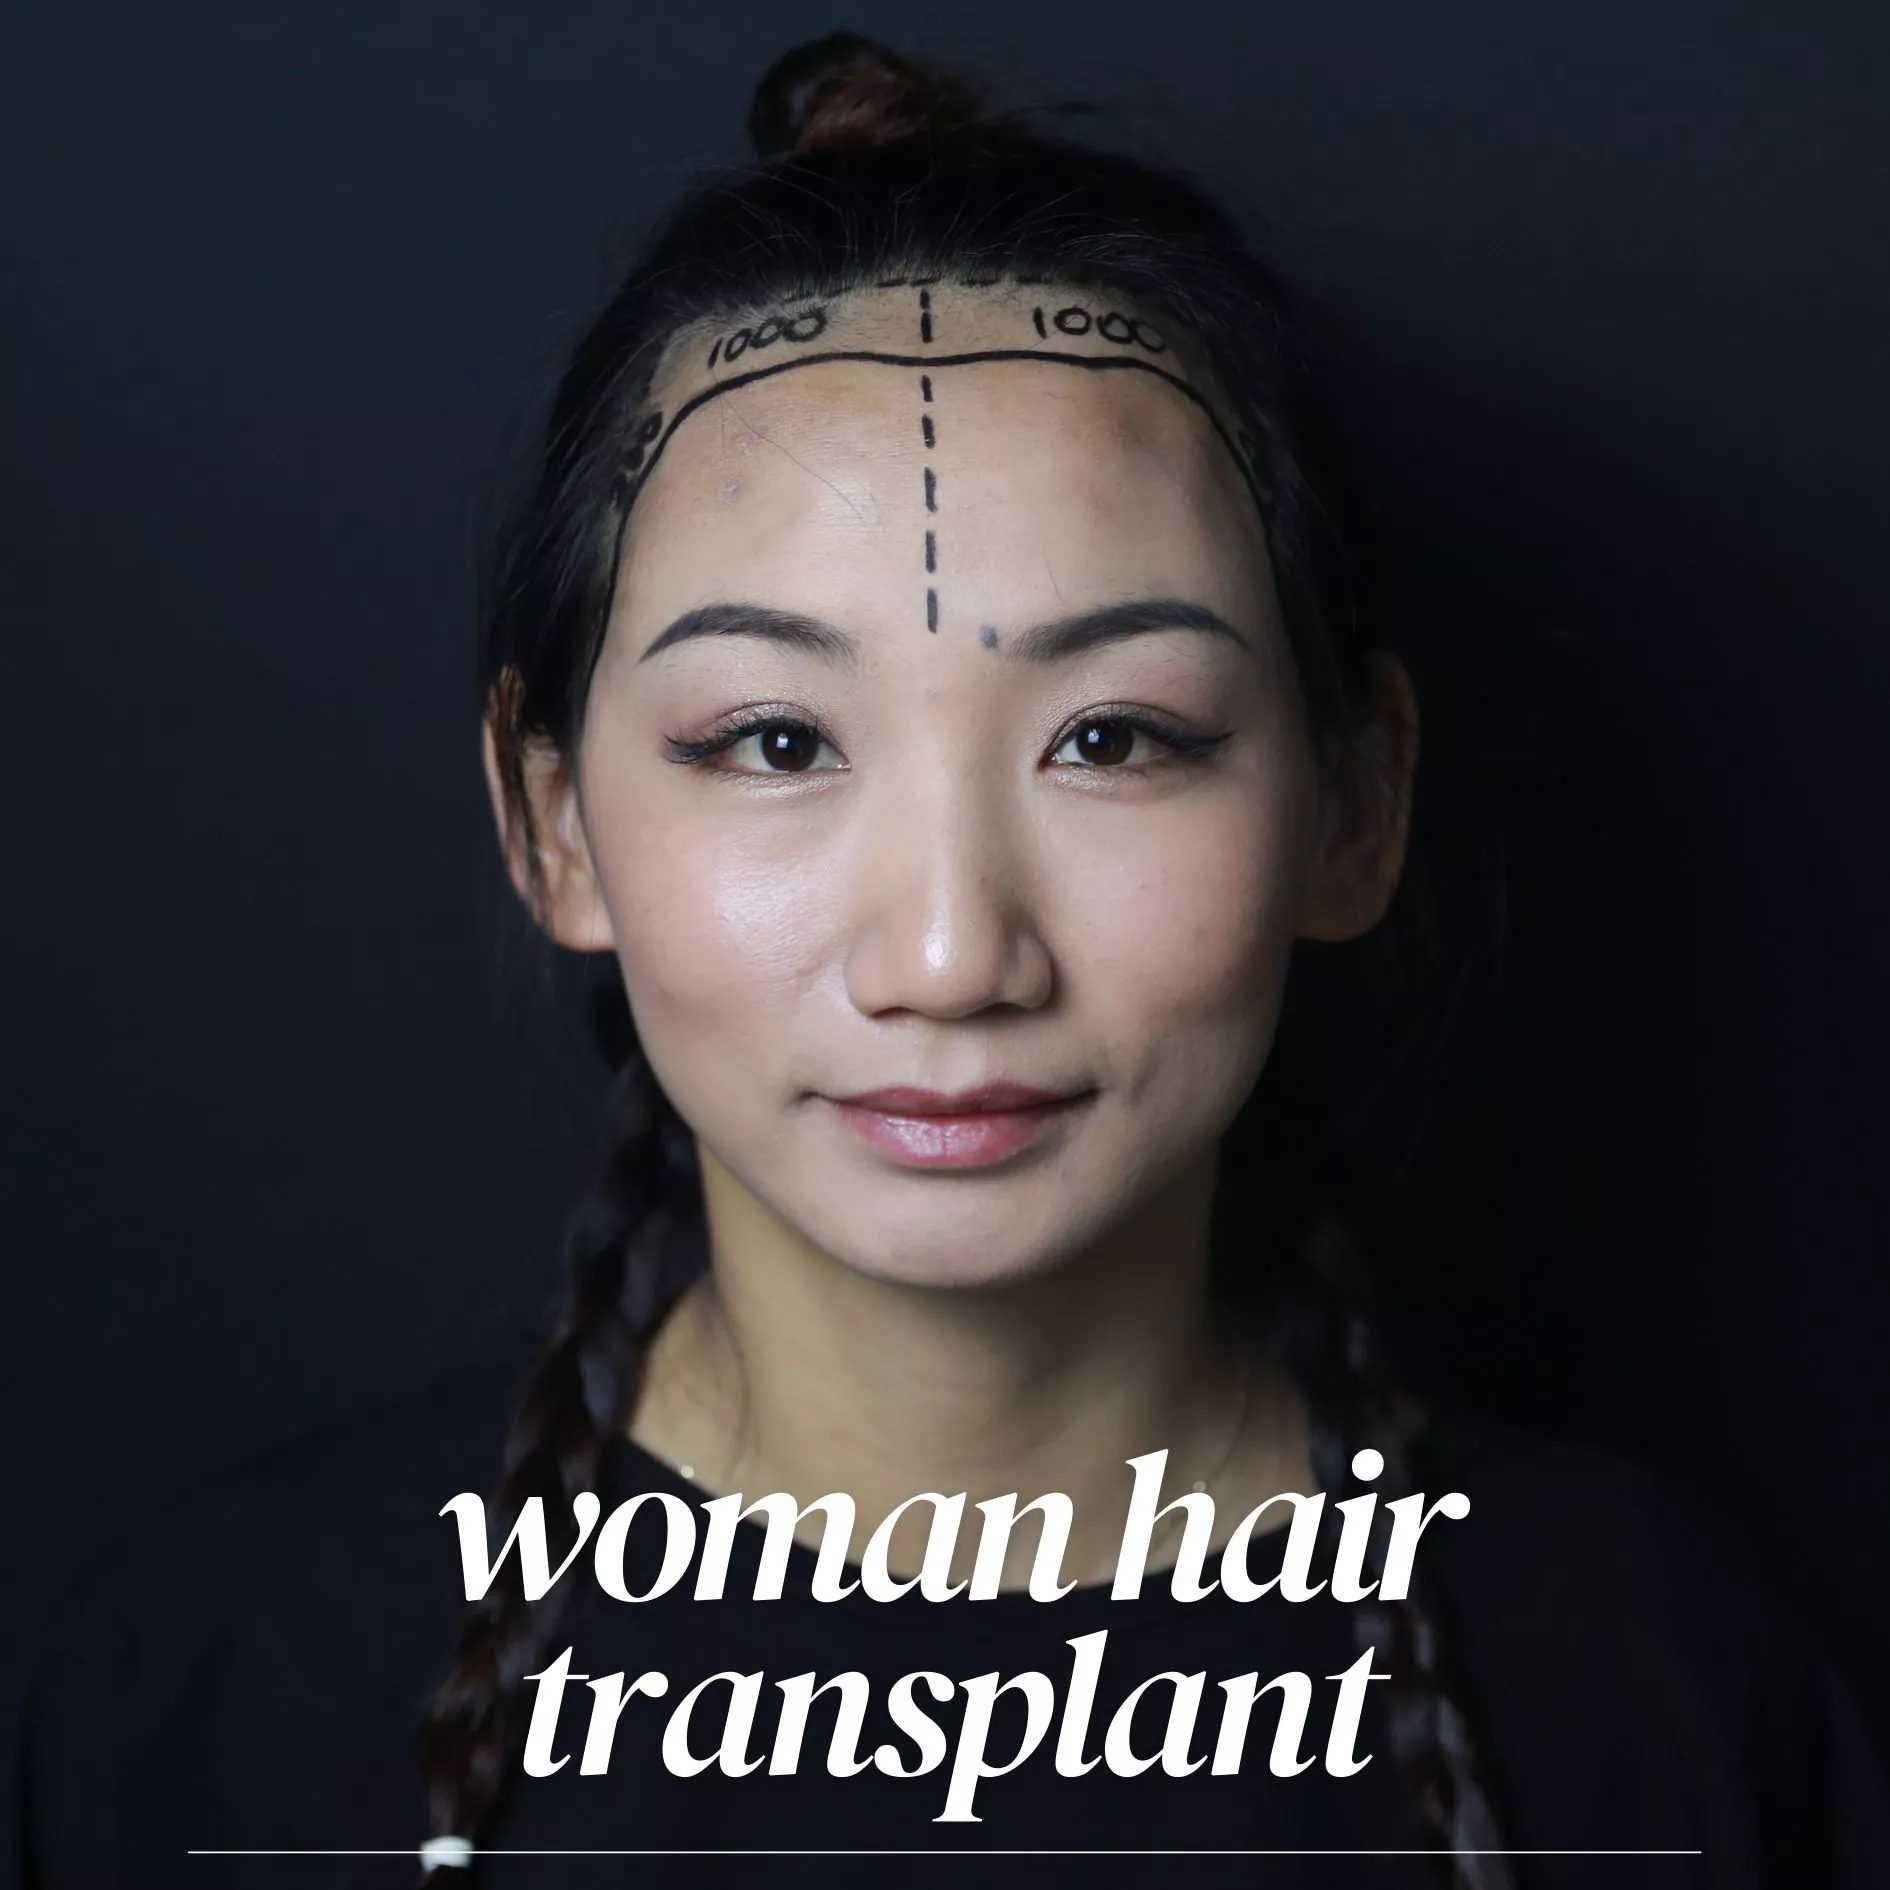 hair transplant in turkey